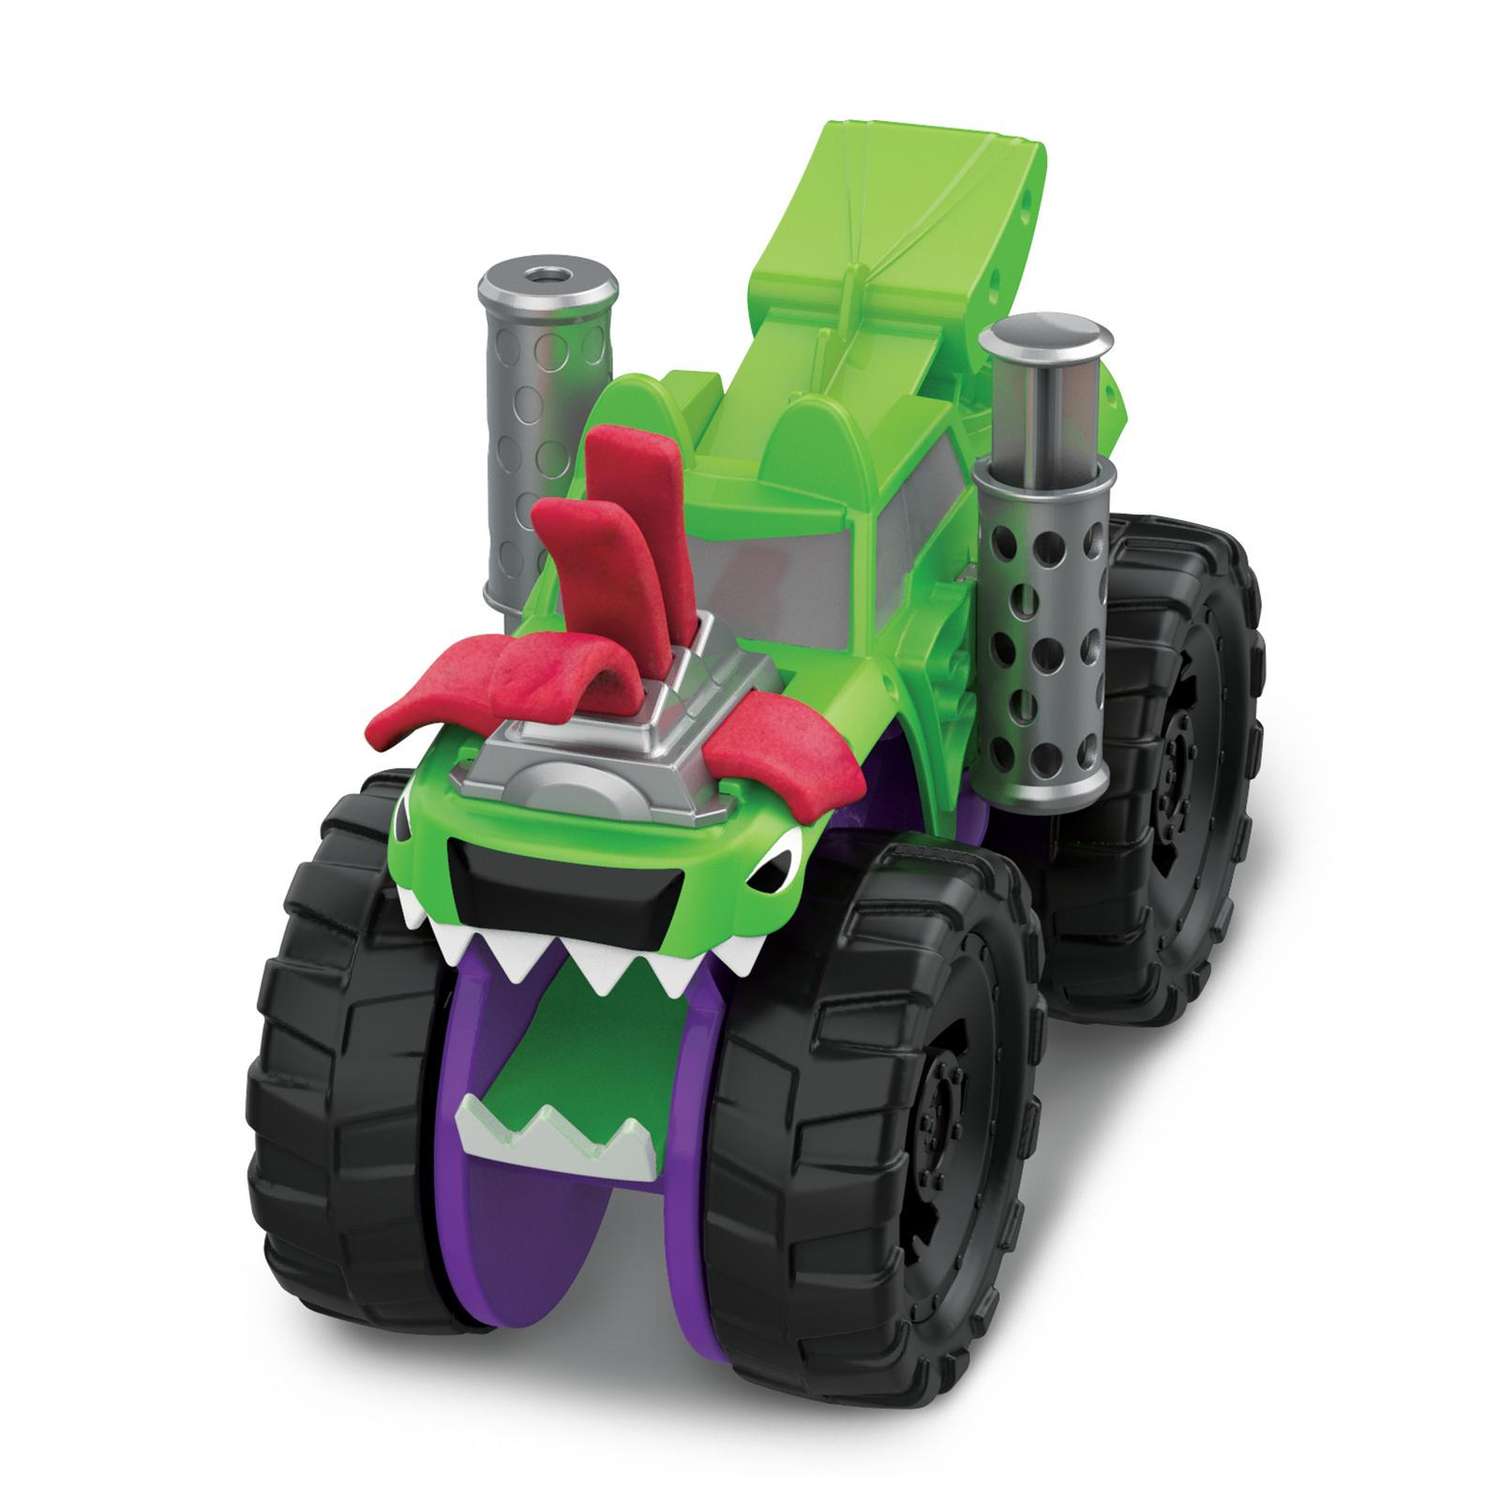 Плейтрак. Игровой набор Hasbro Play Doh Монстер трак f13225l0. Play-Doh игровой набор Монстер трак f1322. Плей до монстр трак игрушка. Play Doh chumpin Monster Truck.